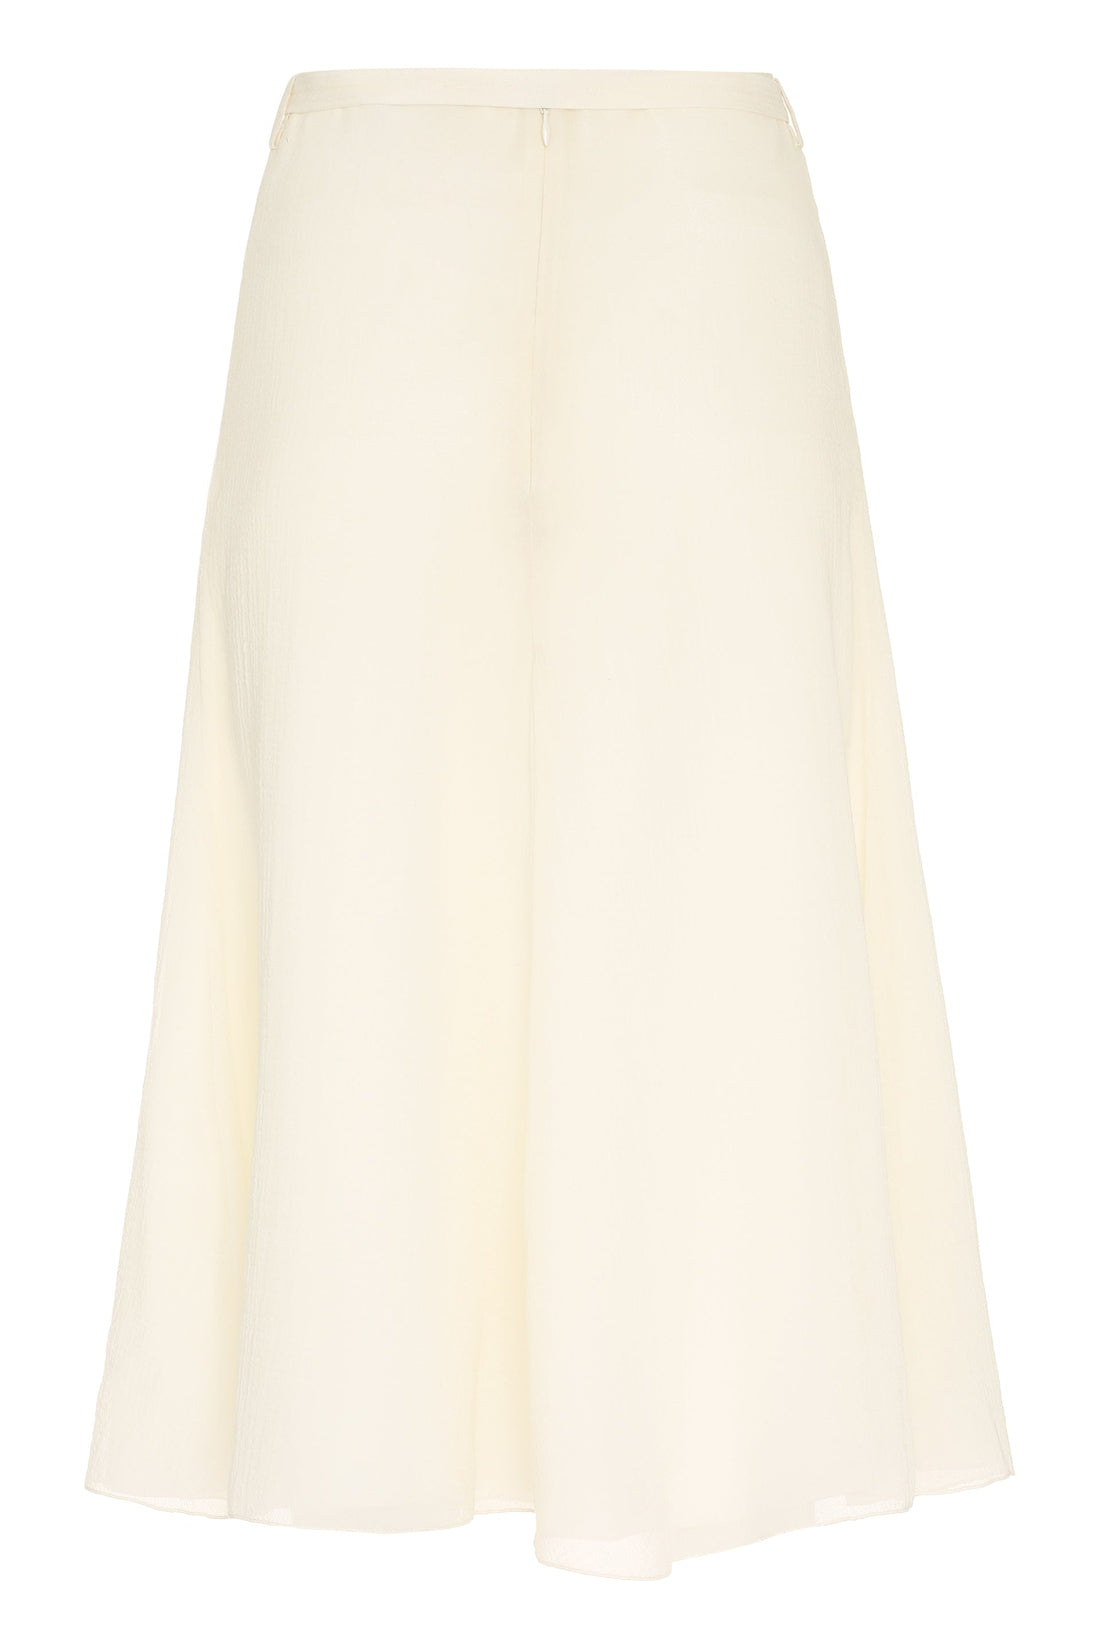 Chloé-OUTLET-SALE-Wool skirt-ARCHIVIST